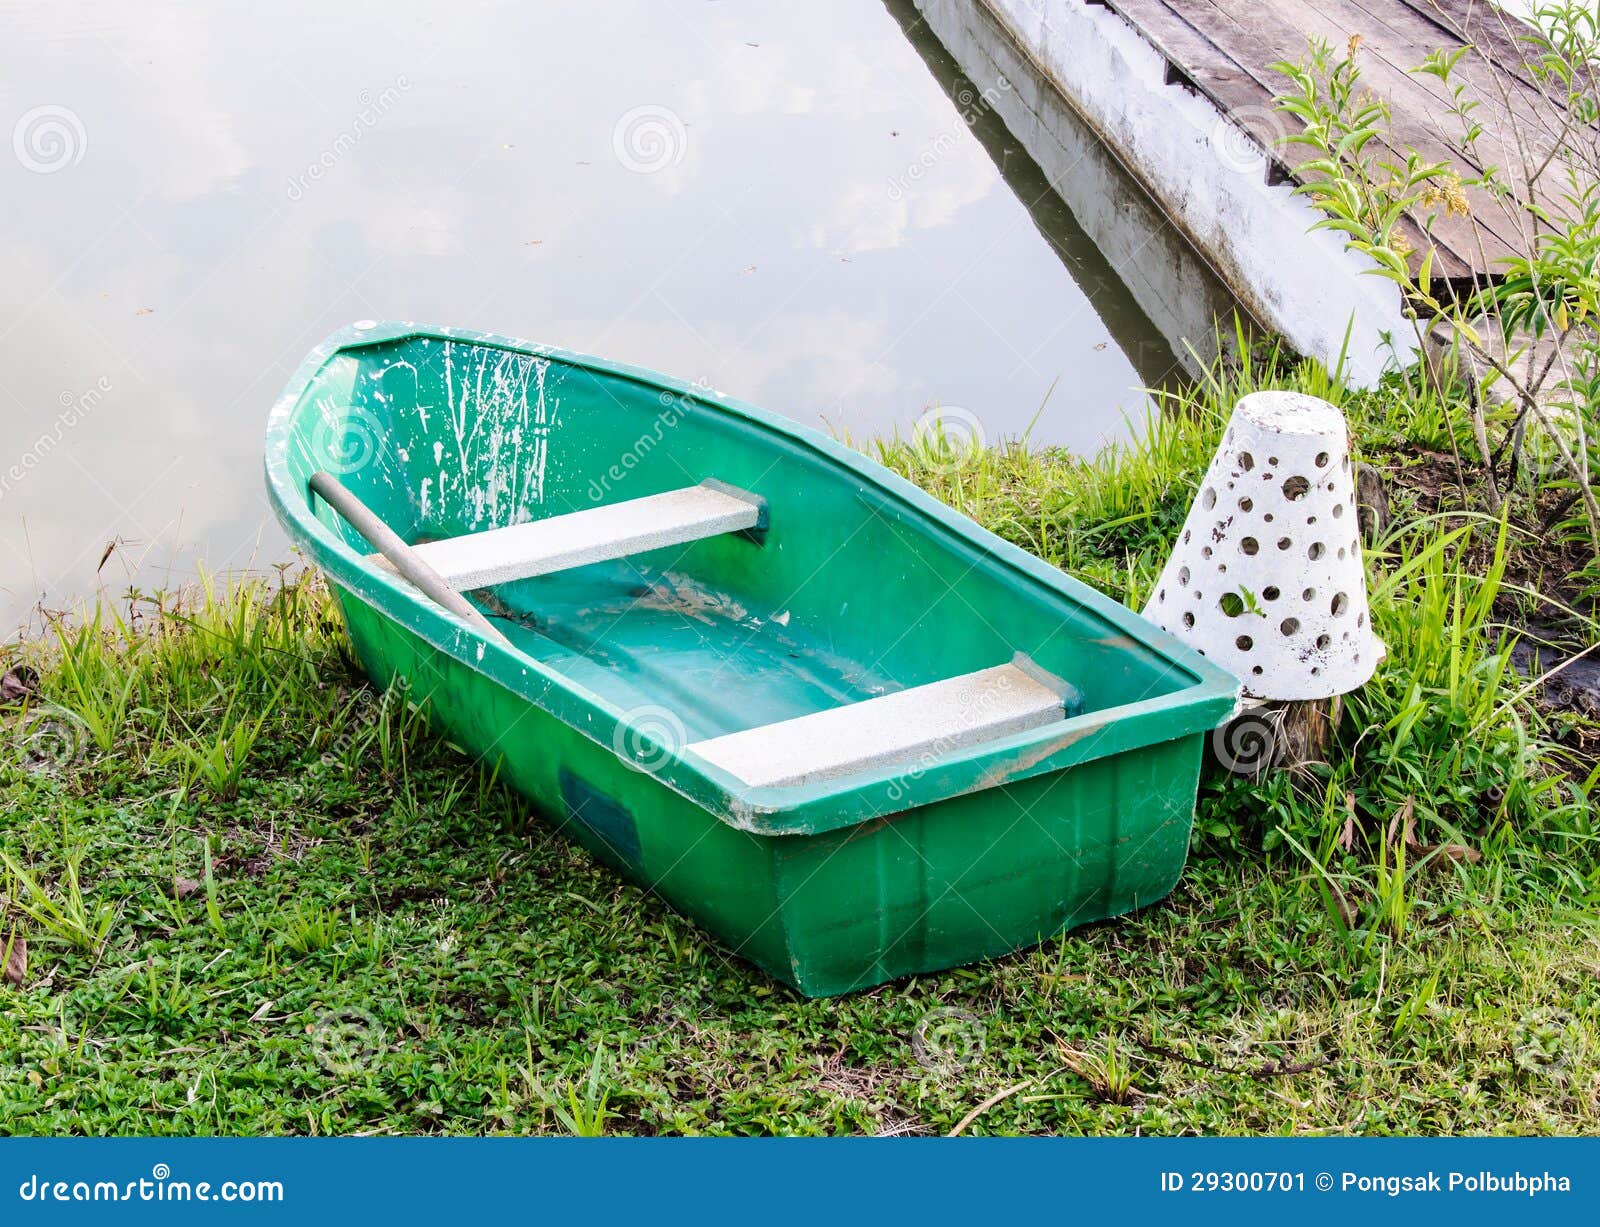 Plastic Row Boat Stock Image - Image: 29300701